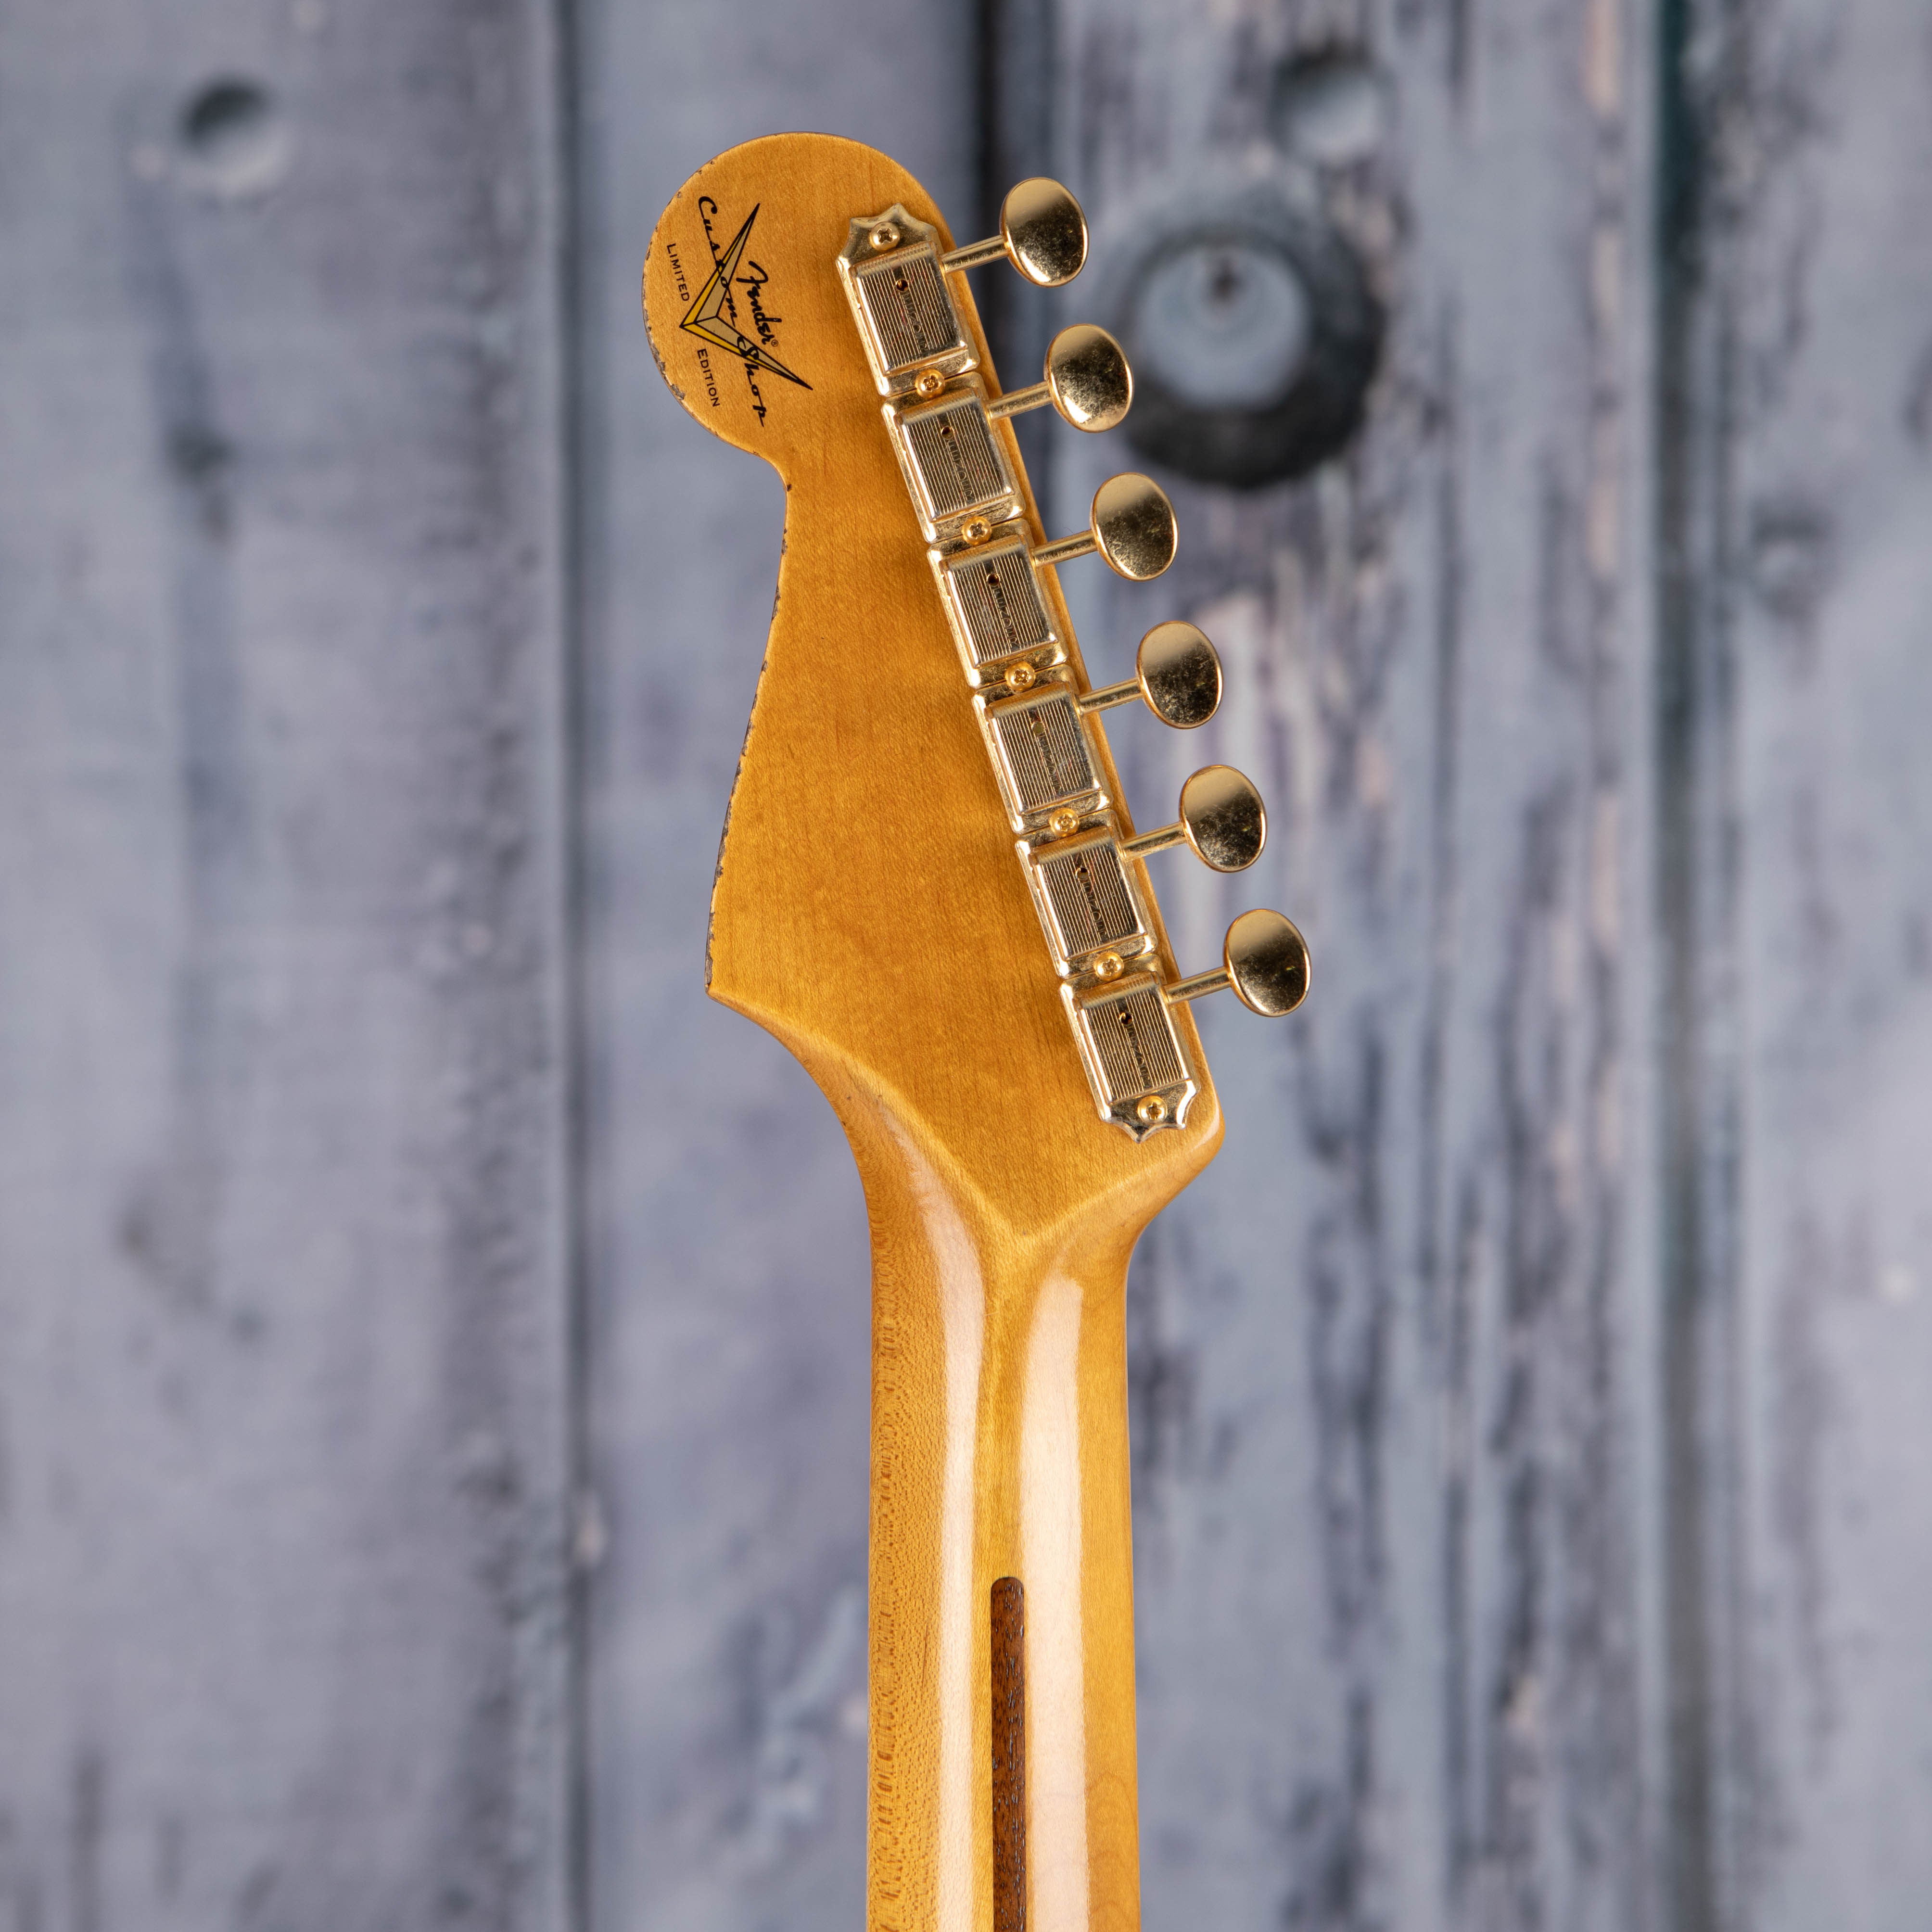 Fender Custom Shop 1956 Stratocaster Hardtail Gold Hardware Relic Closet Classic Electric Guitar, Faded Aged 2-Tone Sunburst, back headstock